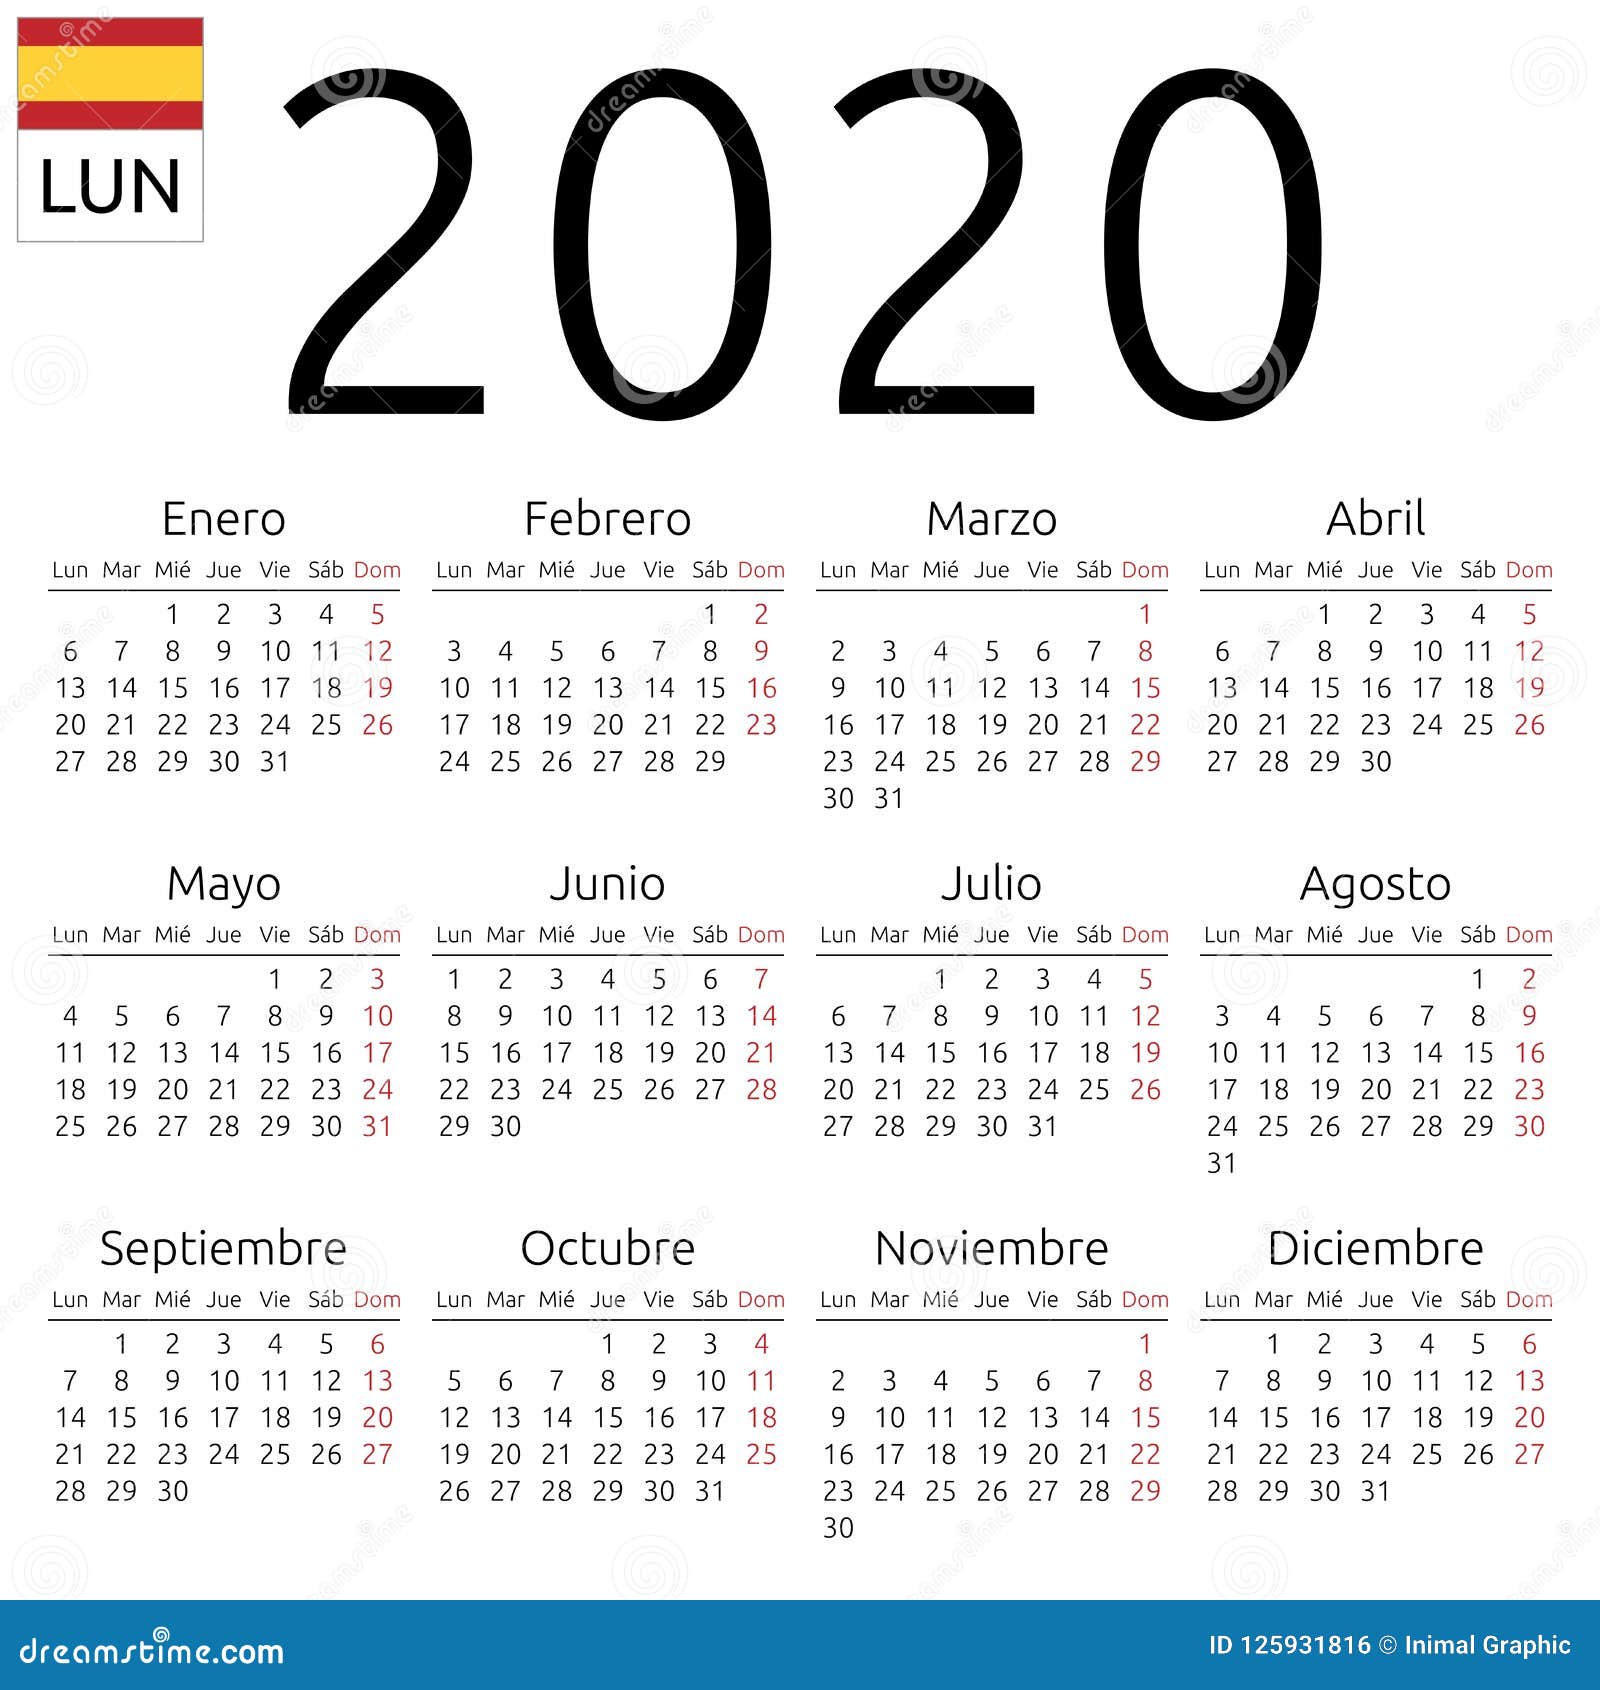 Calendario 2020 Por Semanas Para Imprimir Calendario 2019